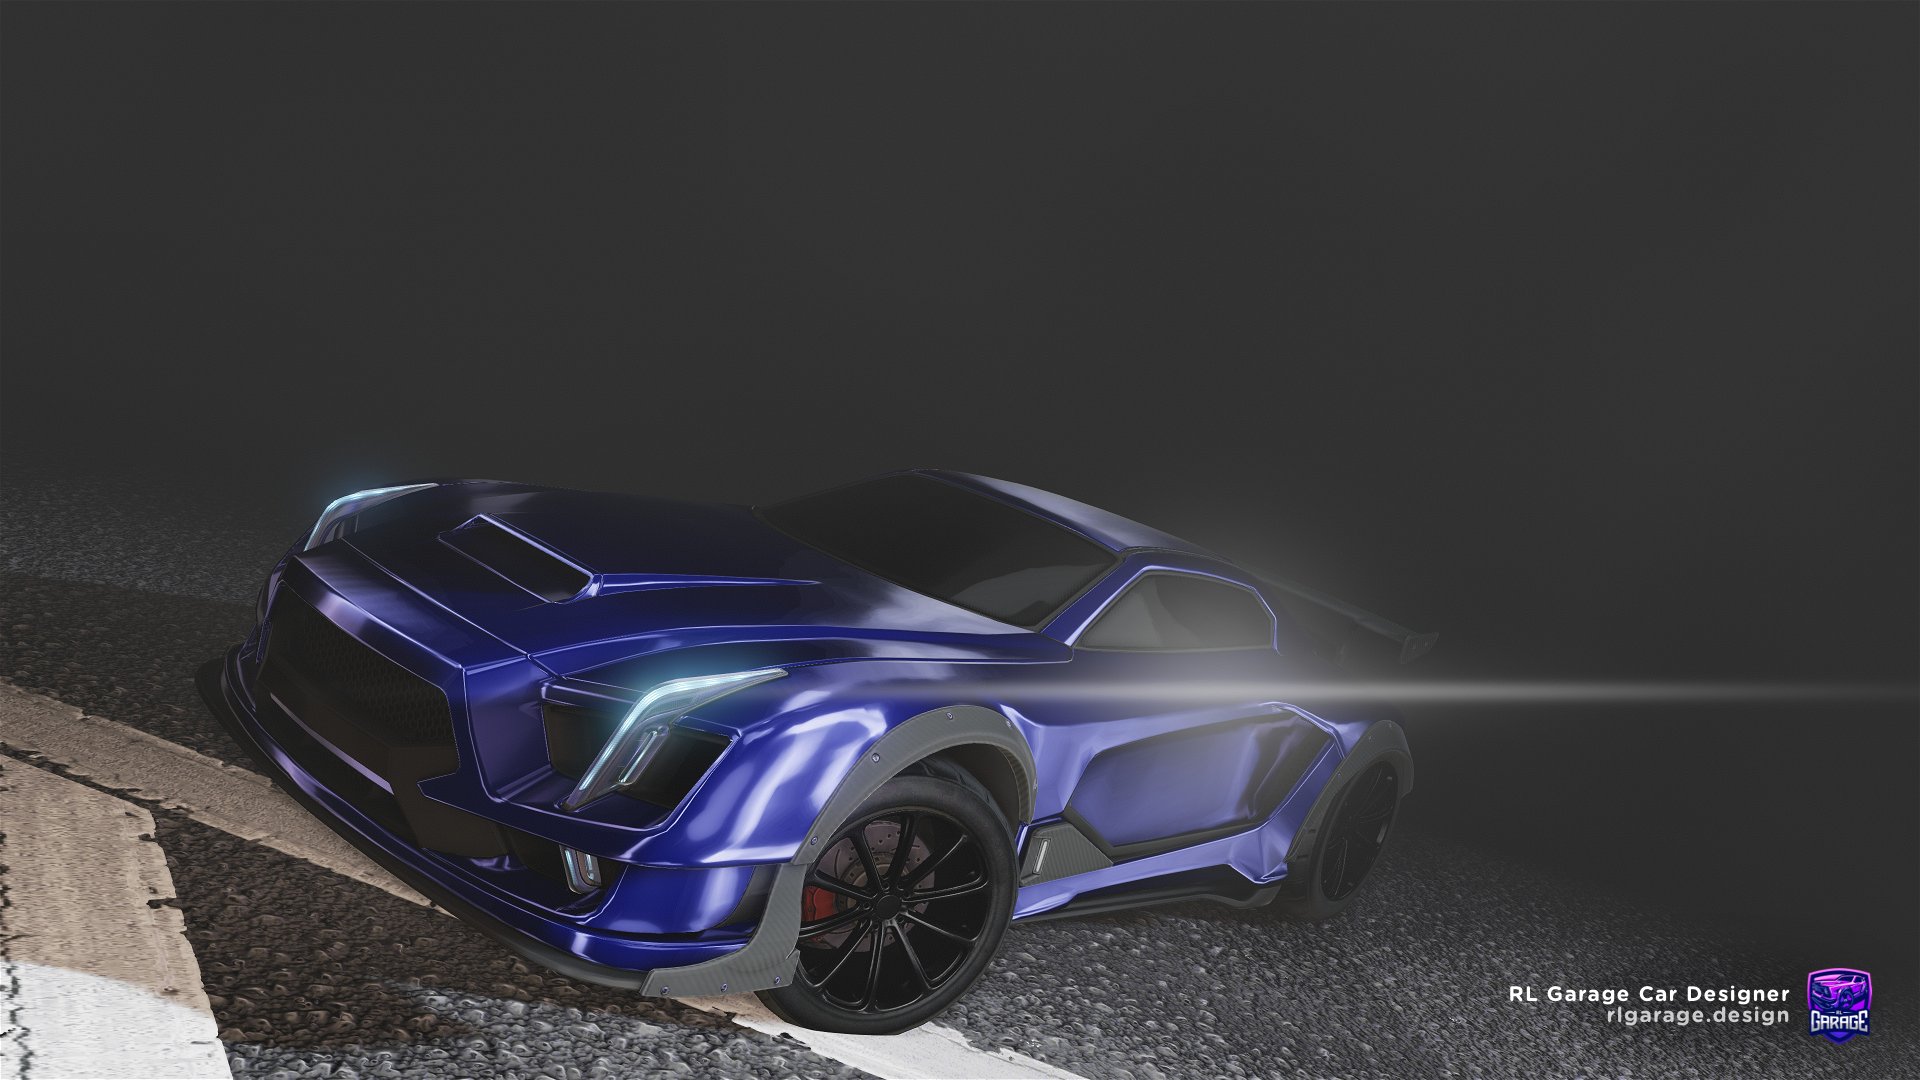 A Rocket League car design by road2notbeingdirtpoor